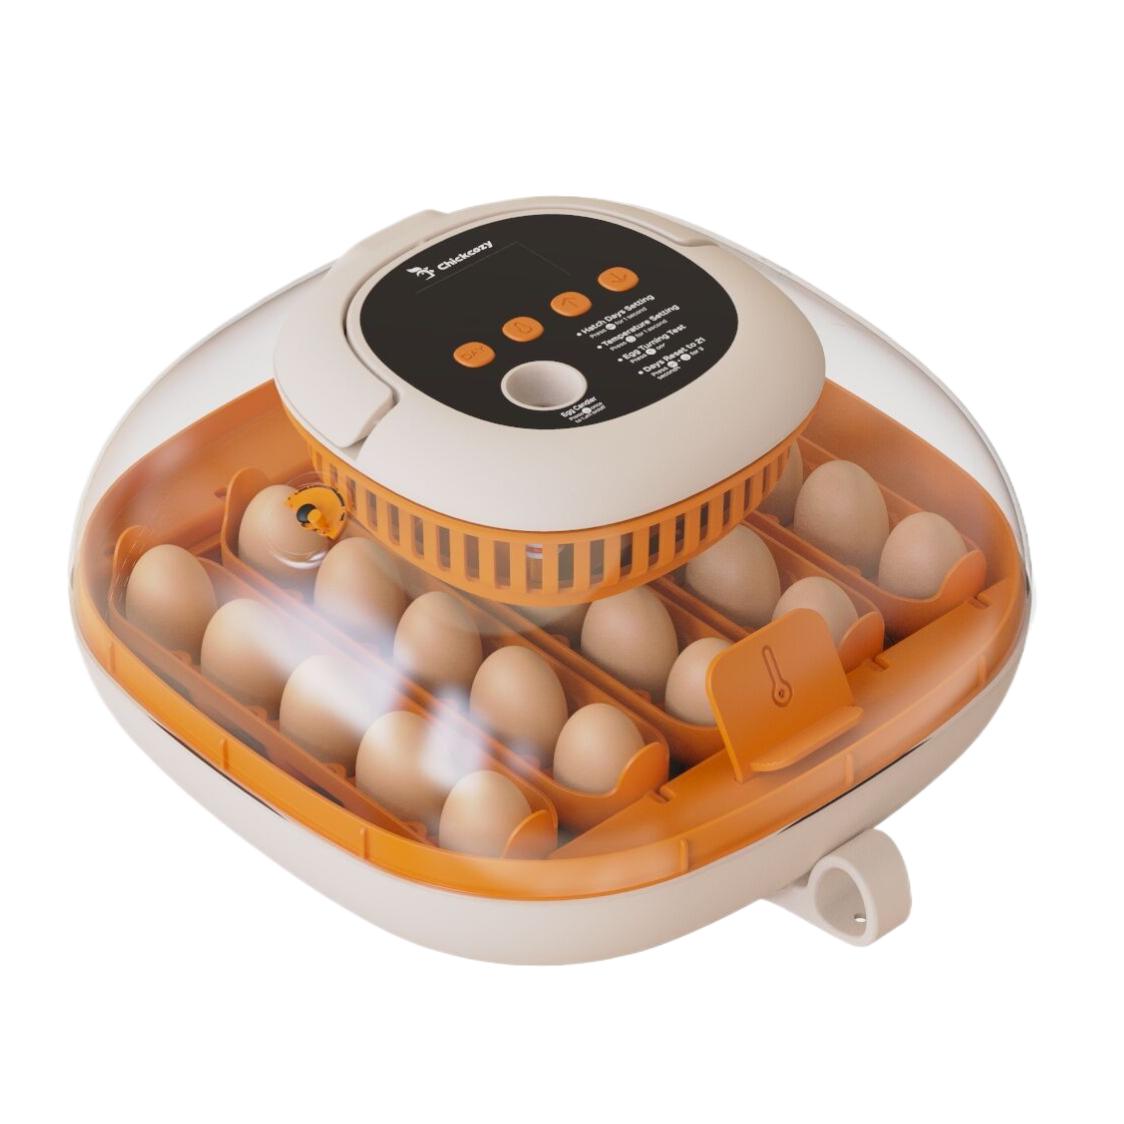 Egg Incubator -25 Egg Capacity